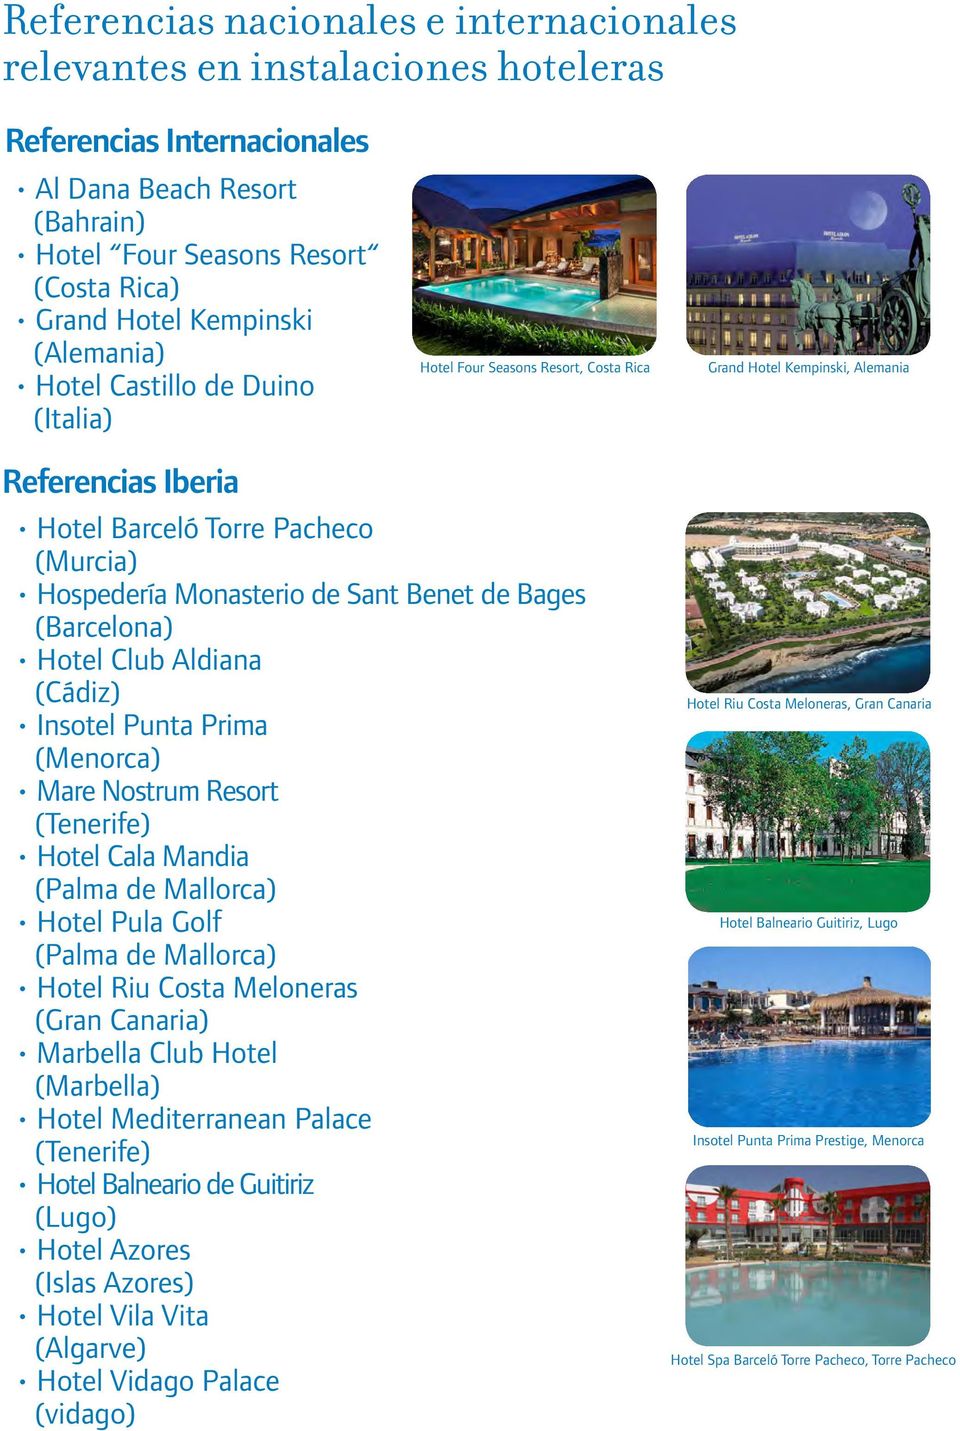 Benet de Bages (Barcelona) Hotel Club Aldiana (Cádiz) Insotel Punta Prima (Menorca) Mare Nostrum Resort (Tenerife) Hotel Cala Mandia (Palma de Mallorca) Hotel Pula Golf (Palma de Mallorca) Hotel Riu